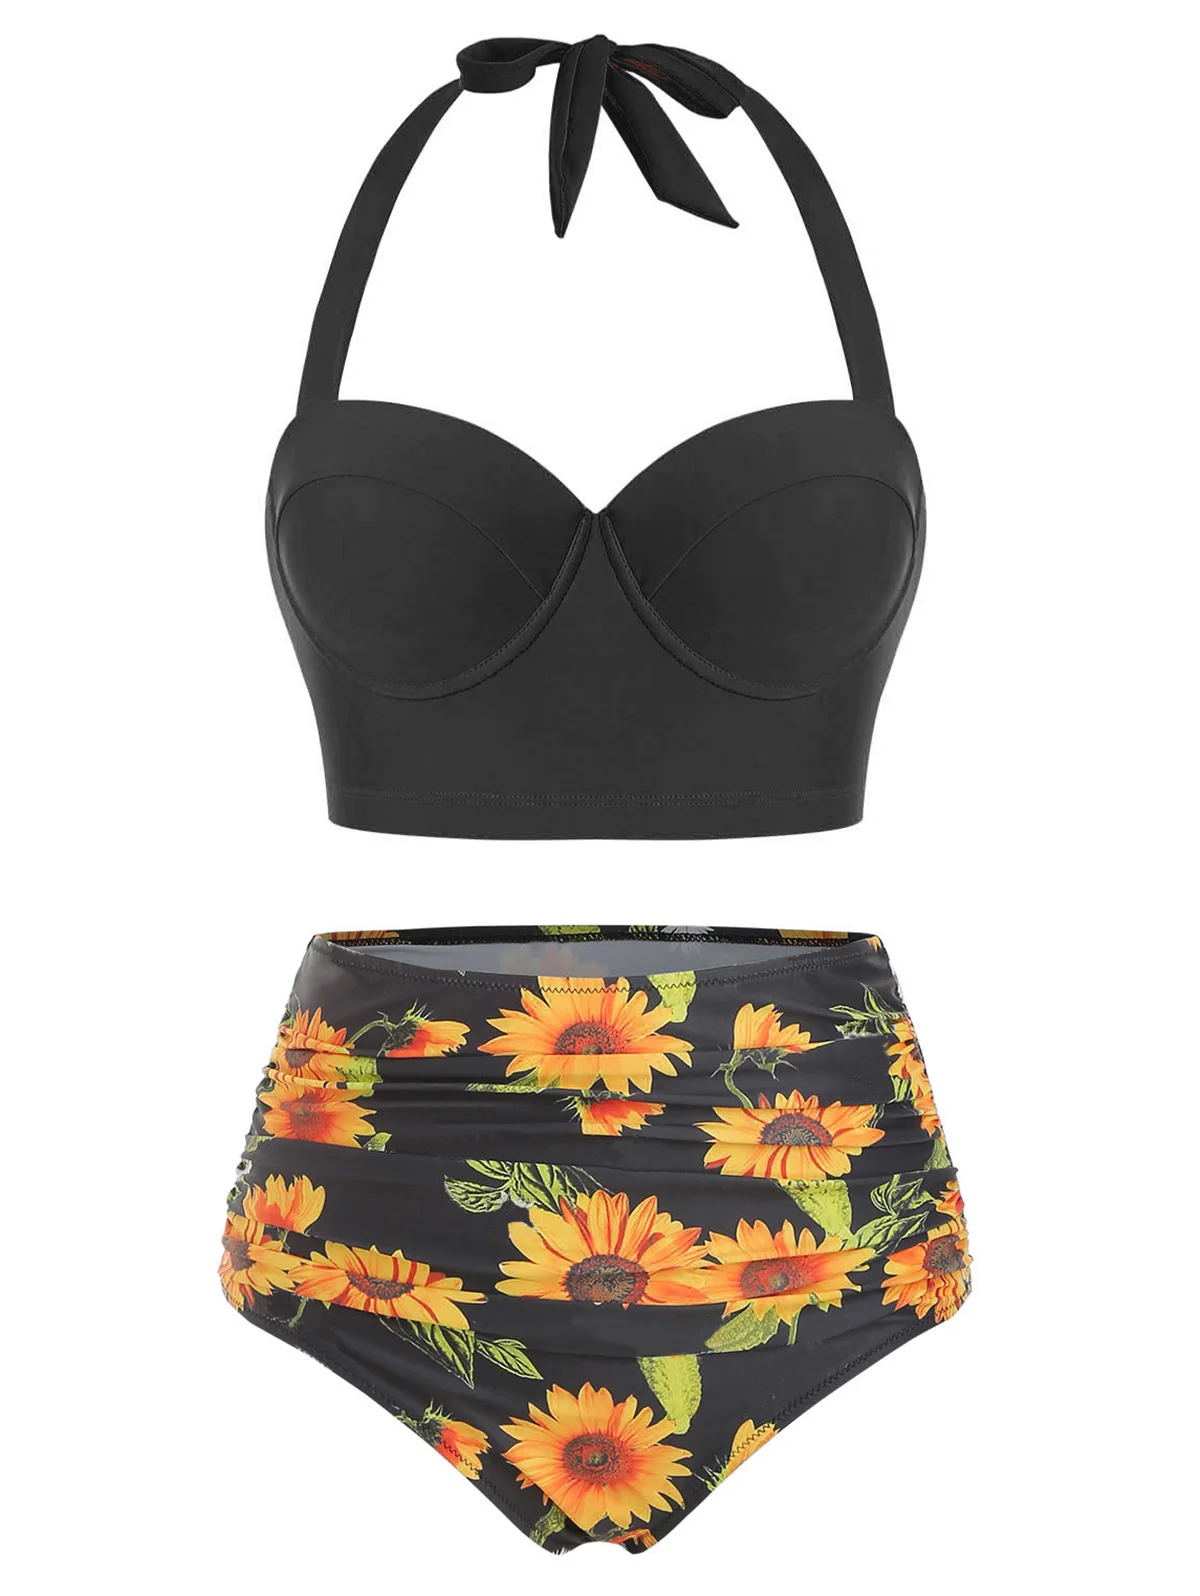 

Wipalo Plus Size 3XL Sunflower Print Underwire Halter Bikini Sets Women Swimsuit Padded Tankini Set Biquini Summer Beach Wear